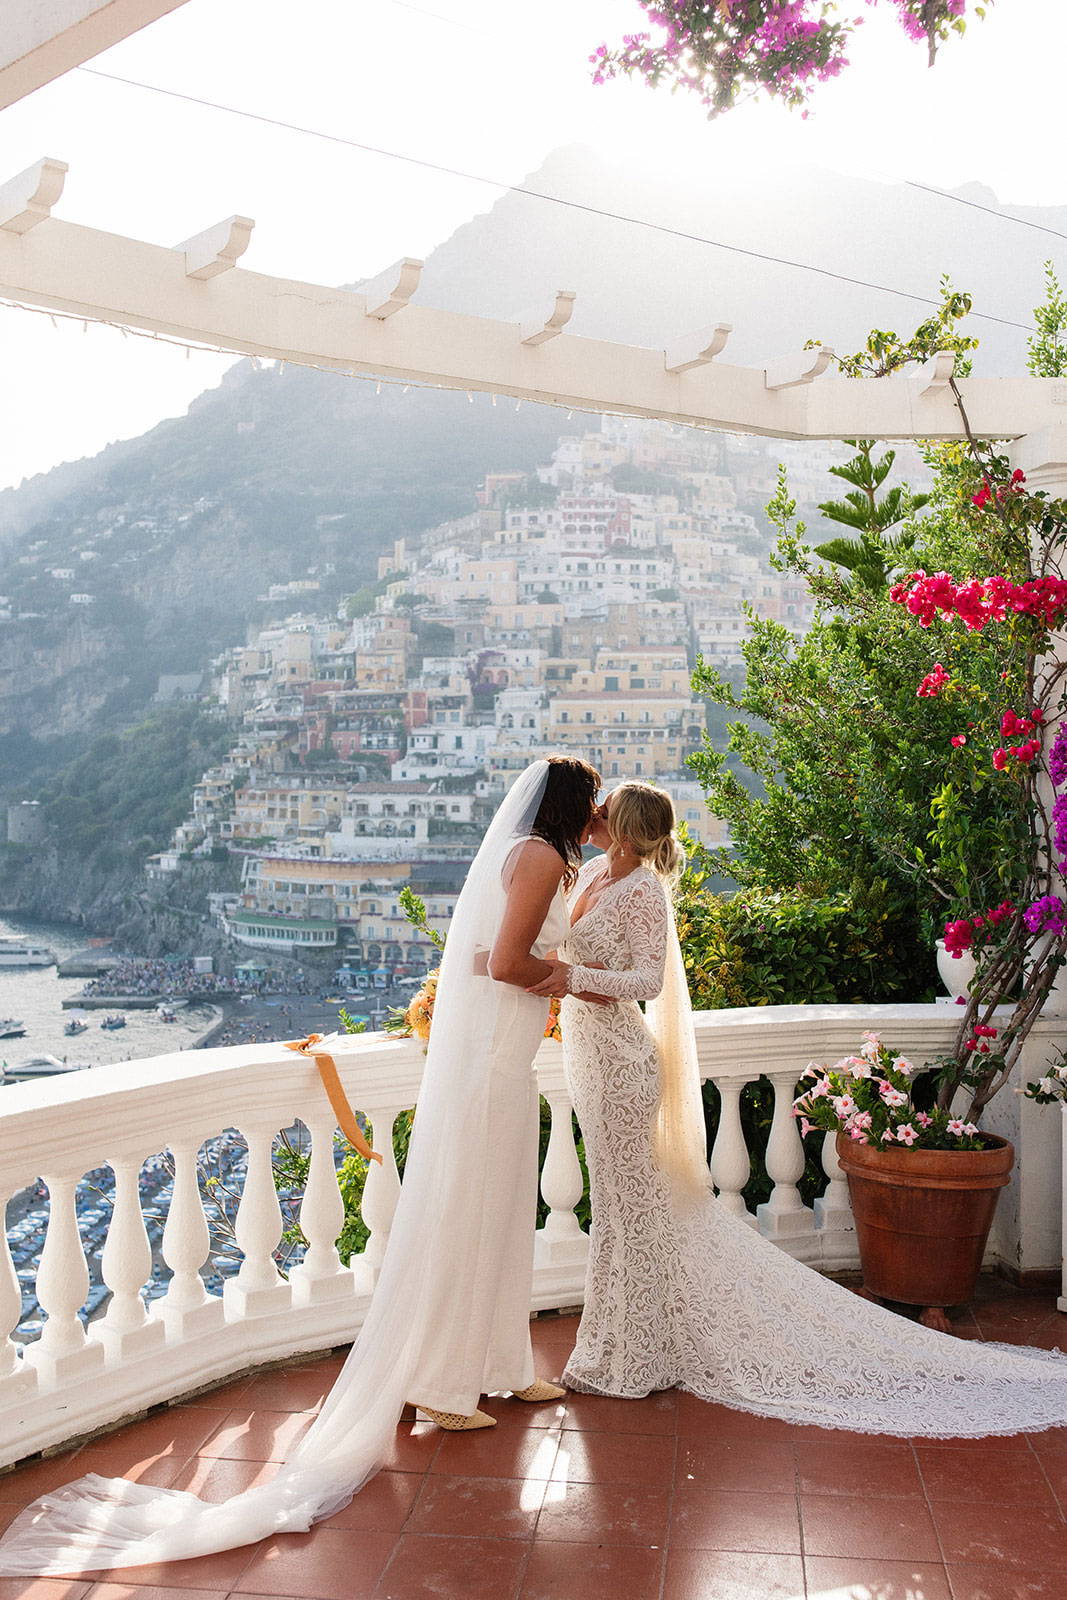 Brides sharing a kiss on a balcony in Positano, Italy